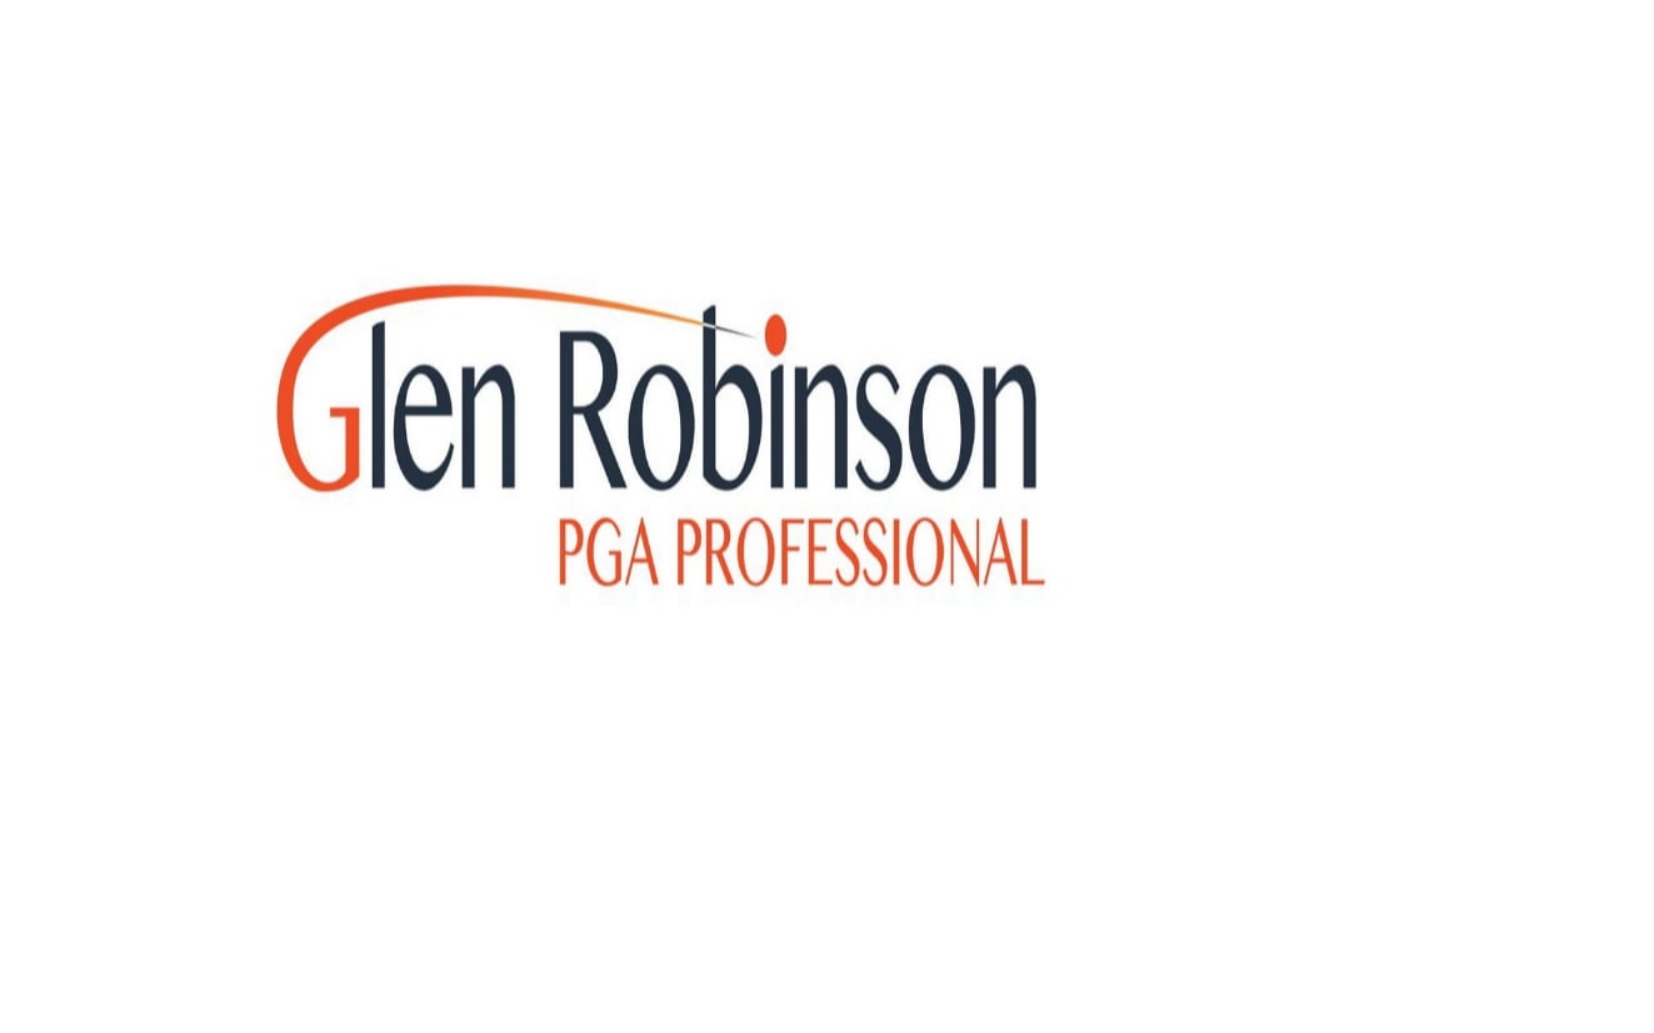 Glen Robinson PGA Professional